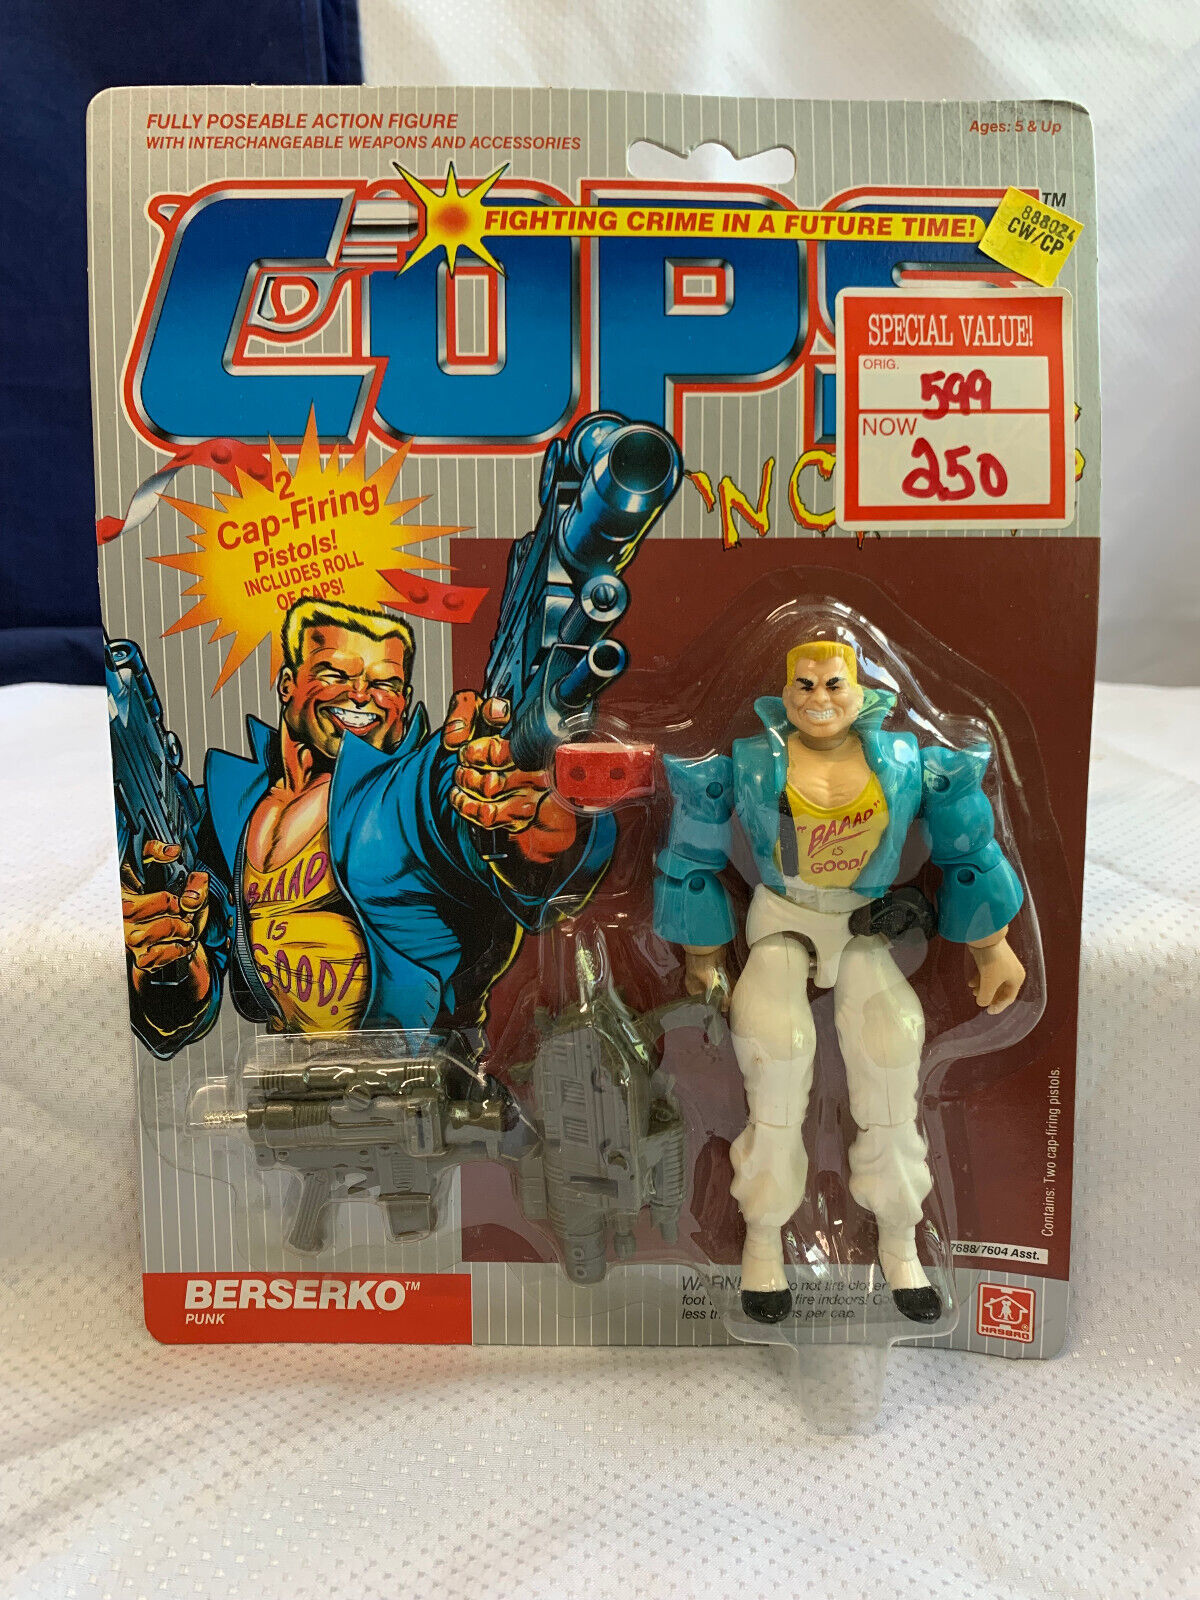 1988 Hasbro COPS "BERSERKO" Poseable Action Figure in Sealed Blister Pack - $178.15